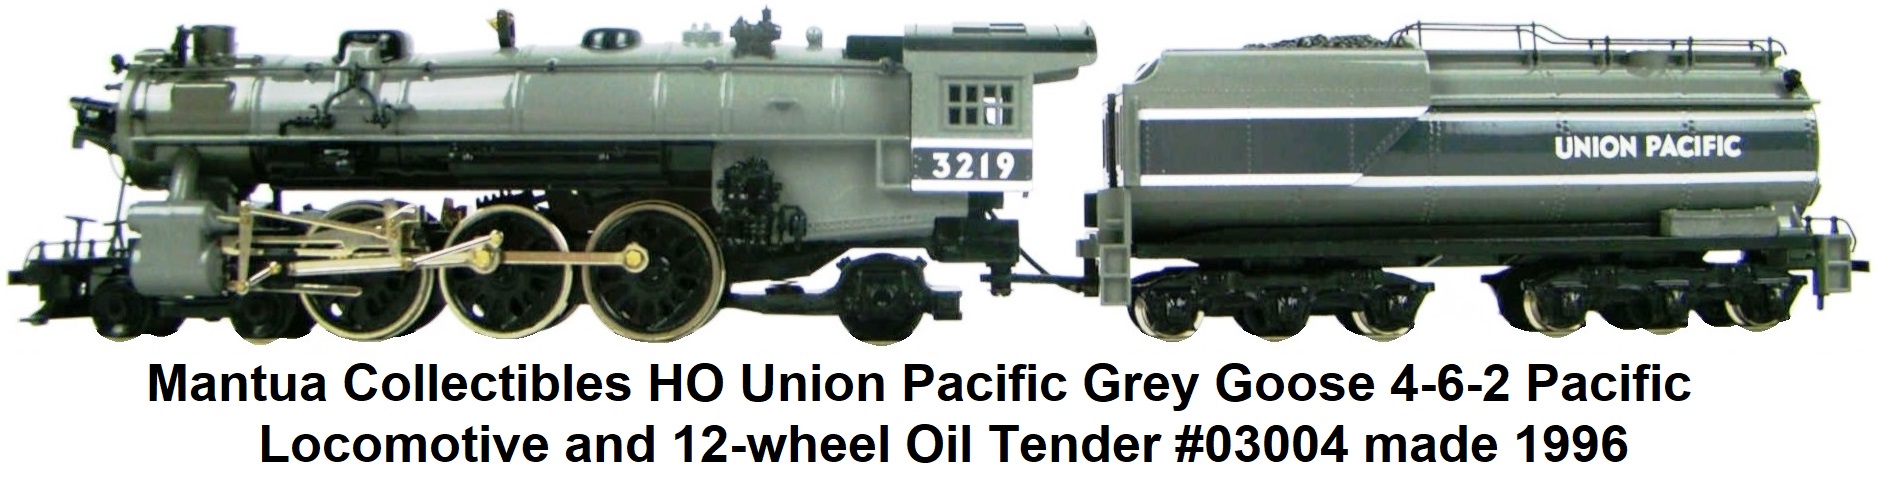 Mantua Collectibles HO Union Pacific Grey Goose 4-6-2 Pacific Locomotive #03004 made 1996